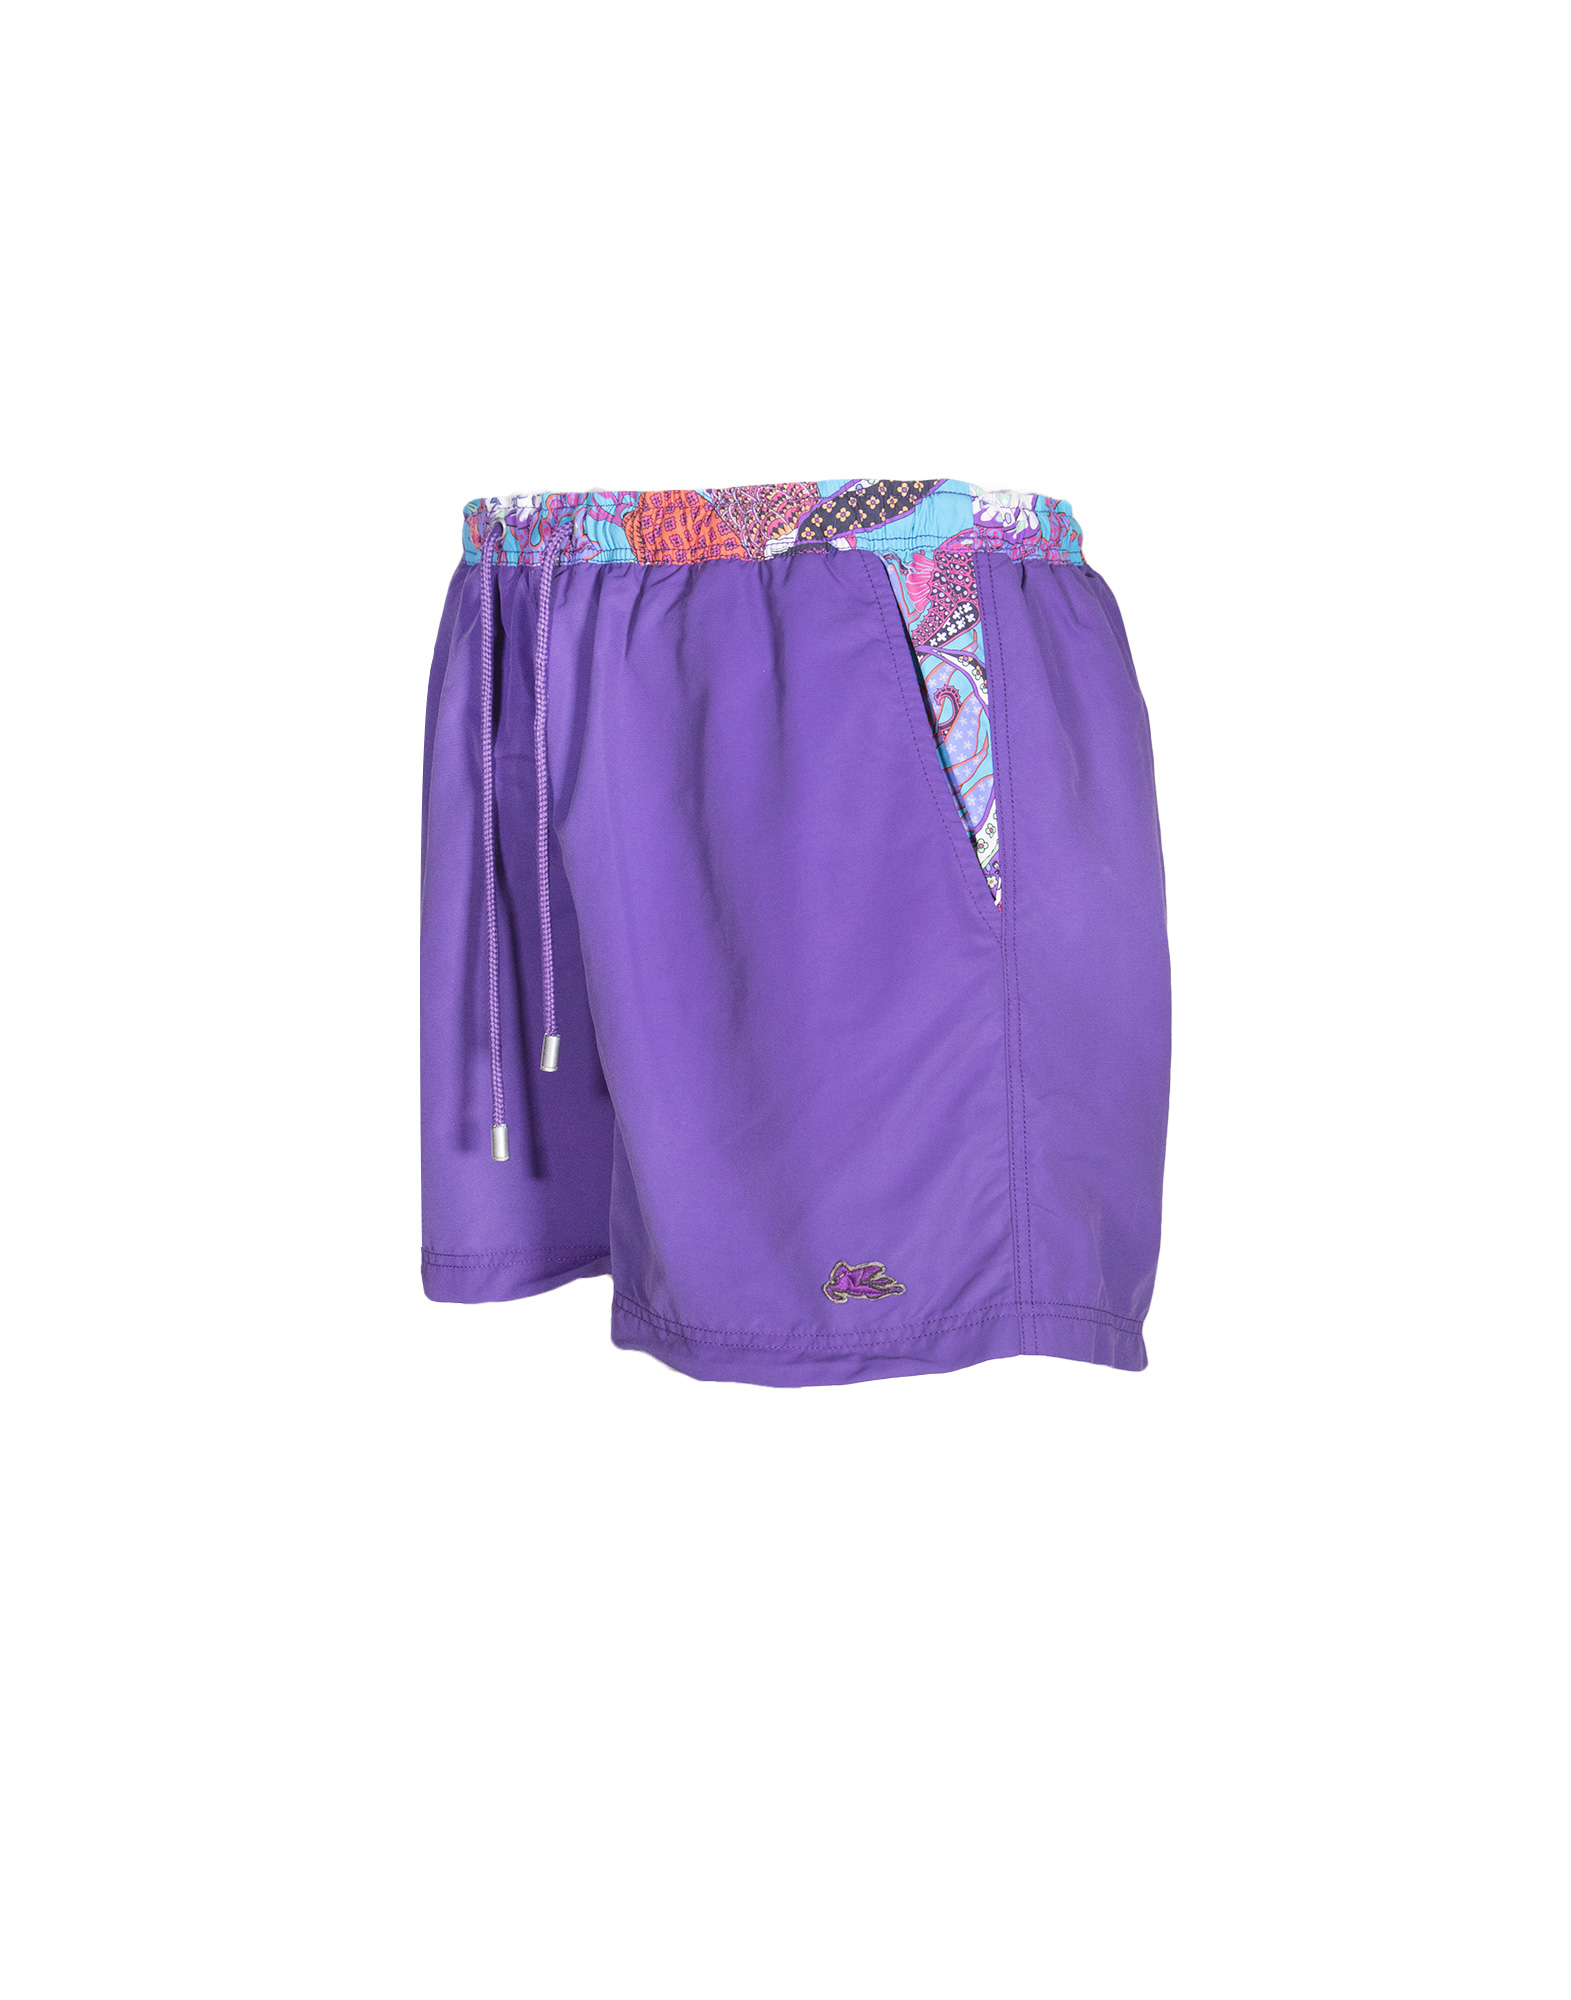 Etro - Purple Shorts Swimsuit